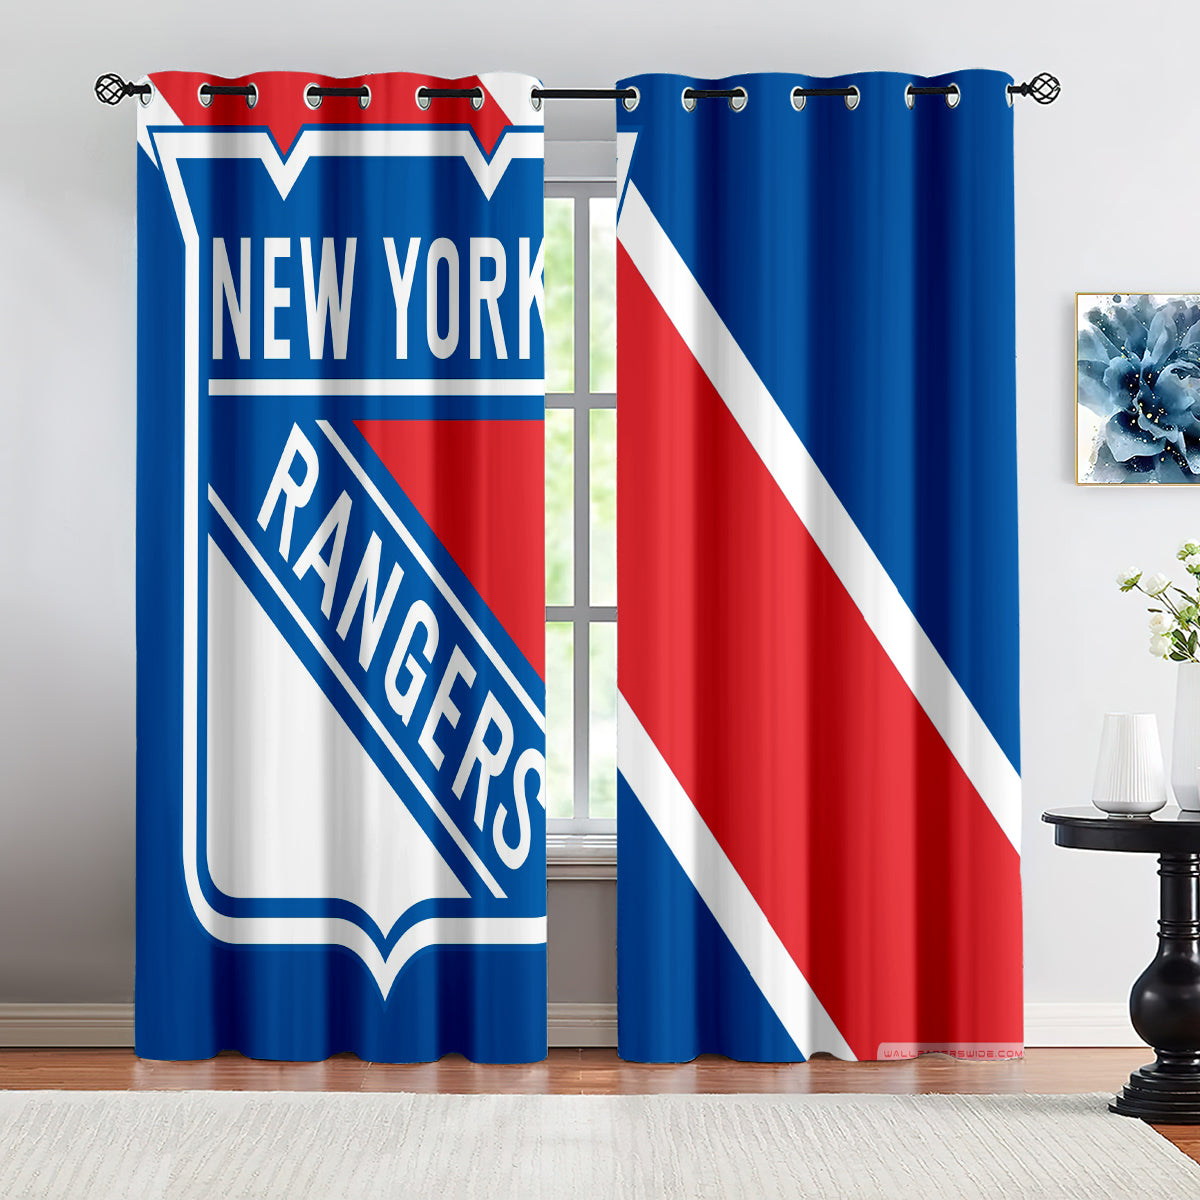 New York Rangers Hockey League Blackout Curtains Drapes For Window Treatment Set